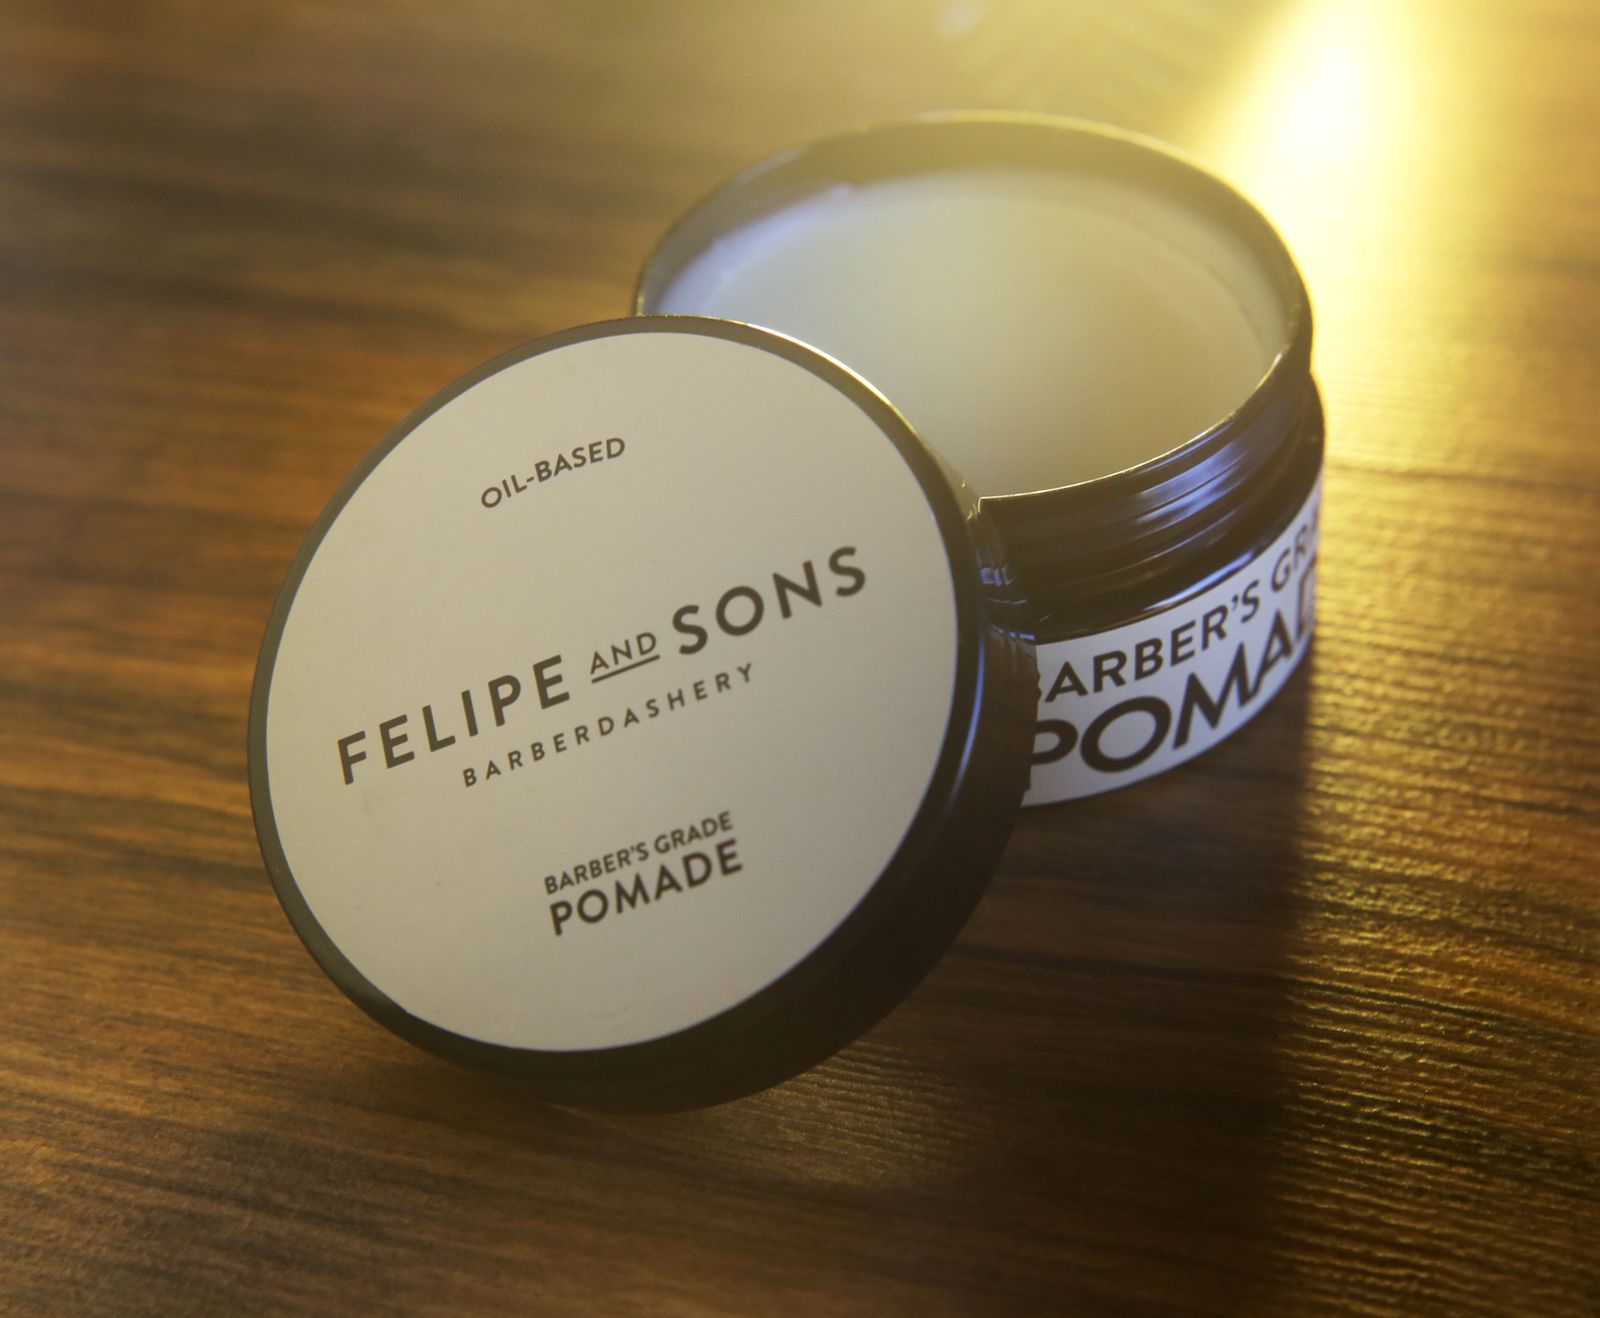 Felipe And Sons ₱500 PH Gift Card